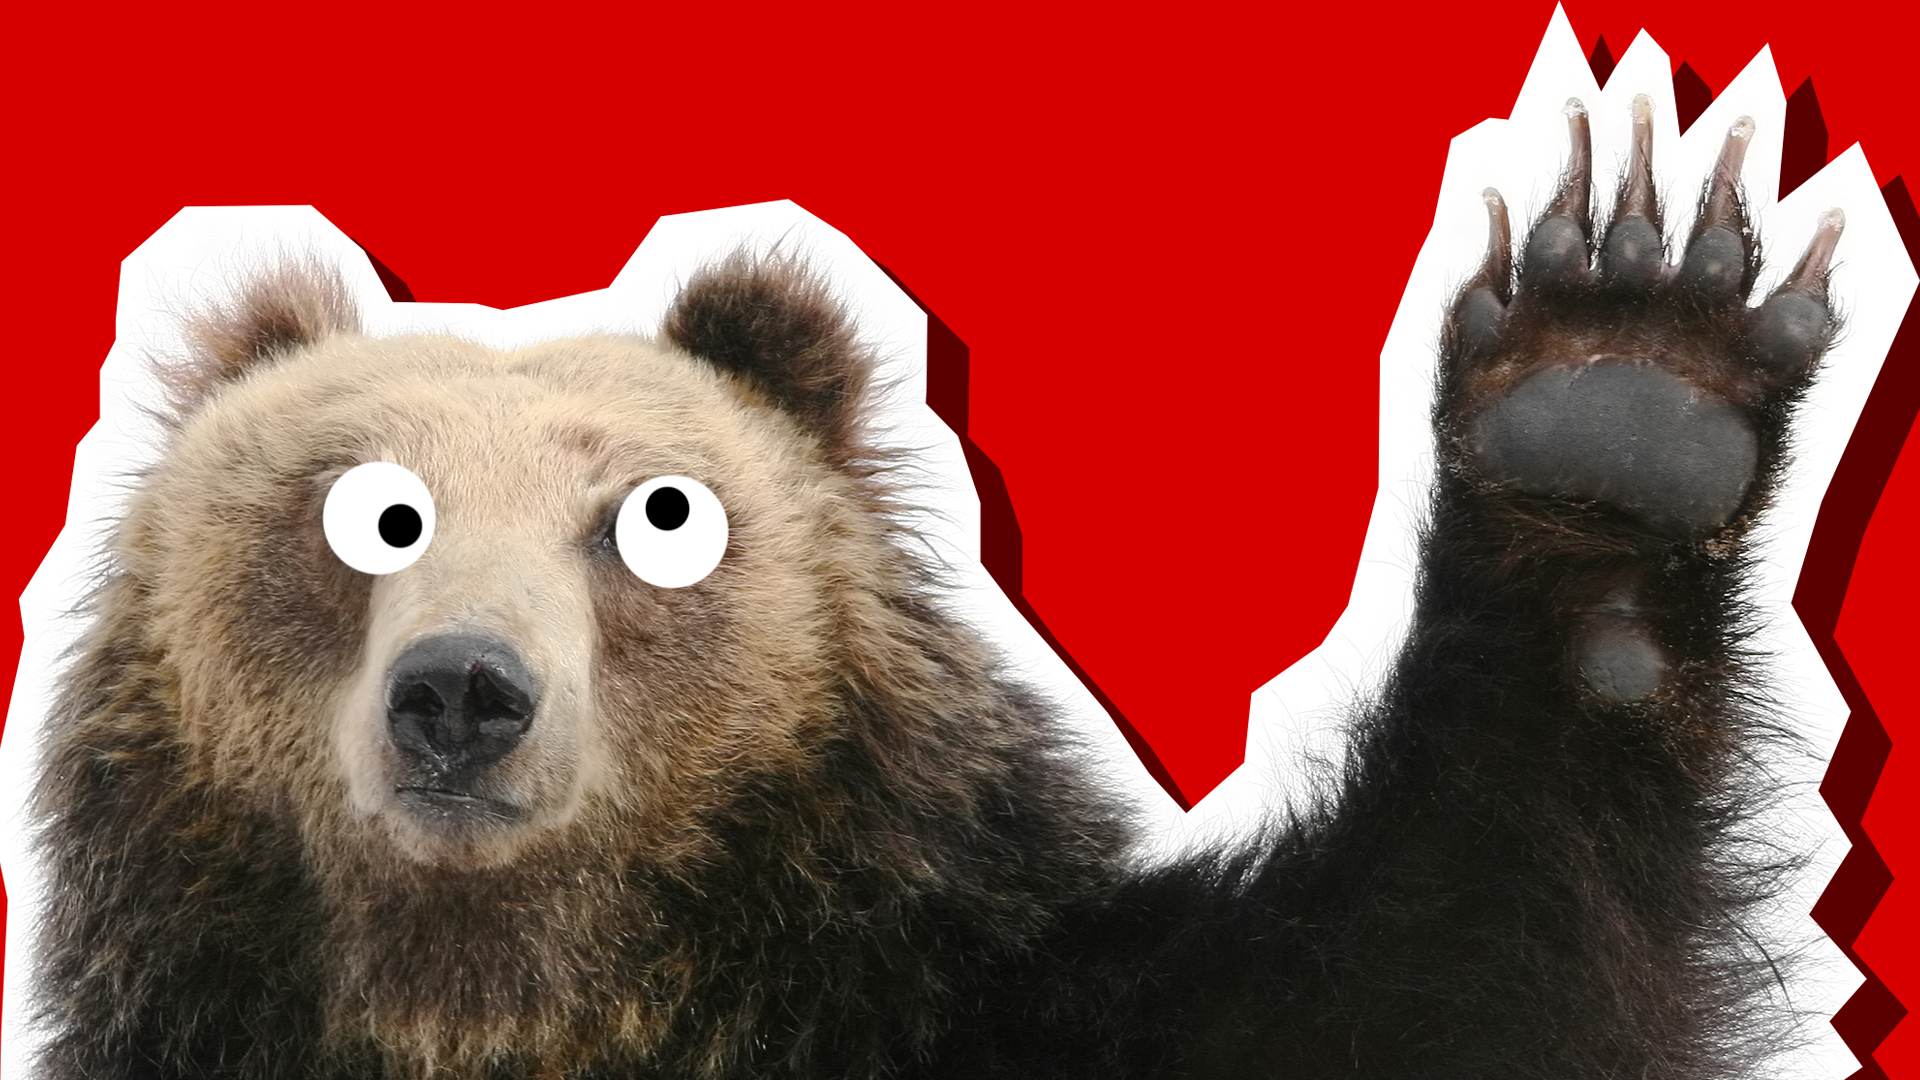 A waving bear